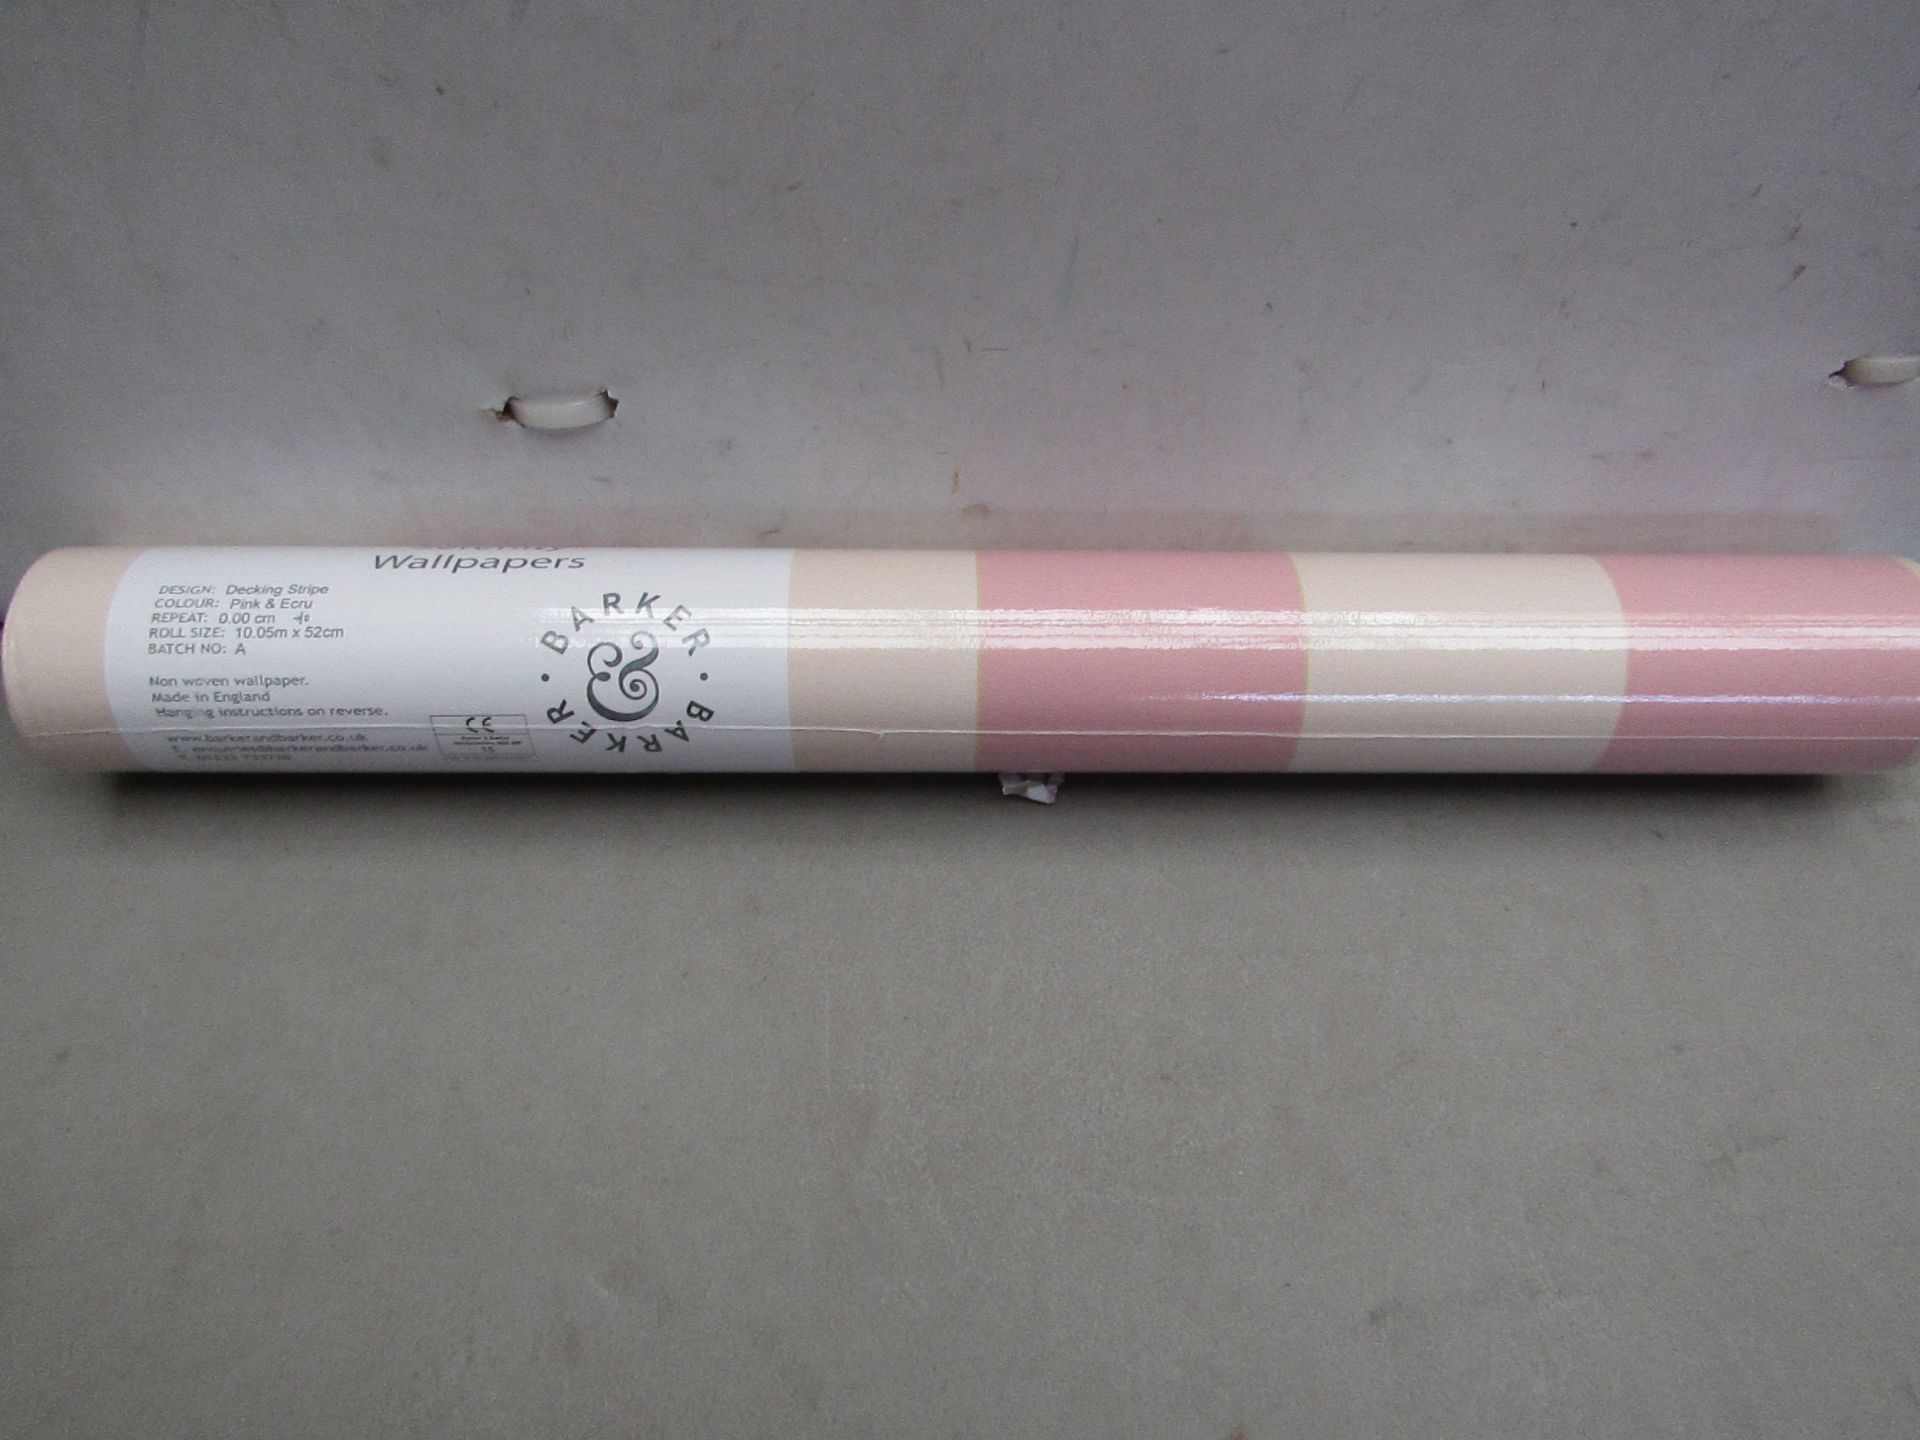 2 X Rolls Of Barker & Barker Serenity Wallpaper, Decking Stripe , Pink & Ecru Repeat Pattern 00.0